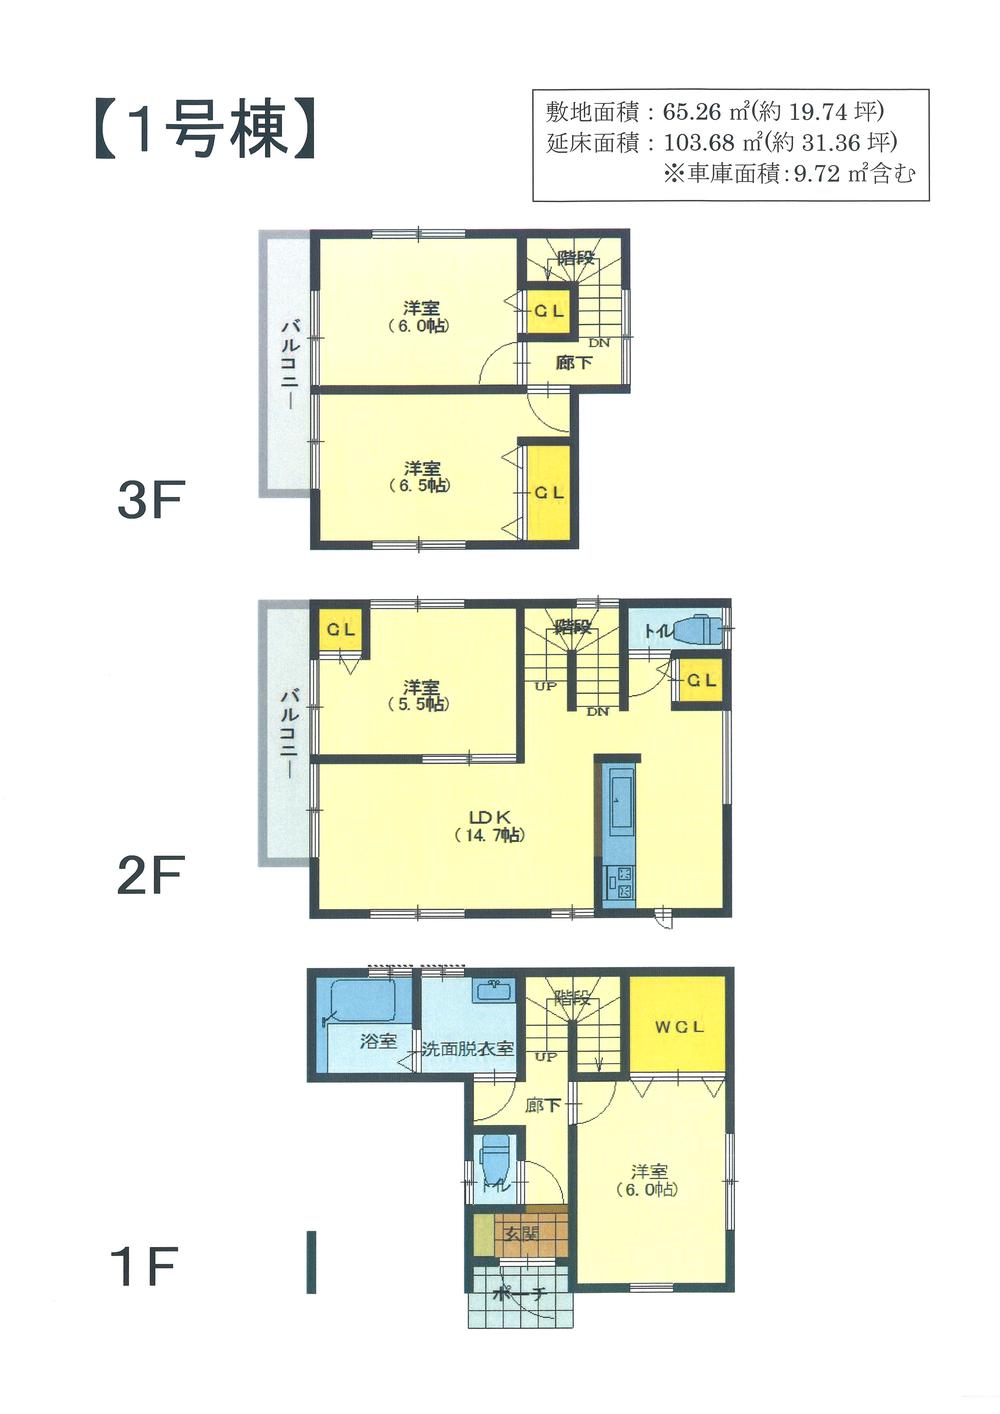 Floor plan. (1 Building), Price 35,800,000 yen, 4LDK, Land area 65.26 sq m , Building area 103.68 sq m